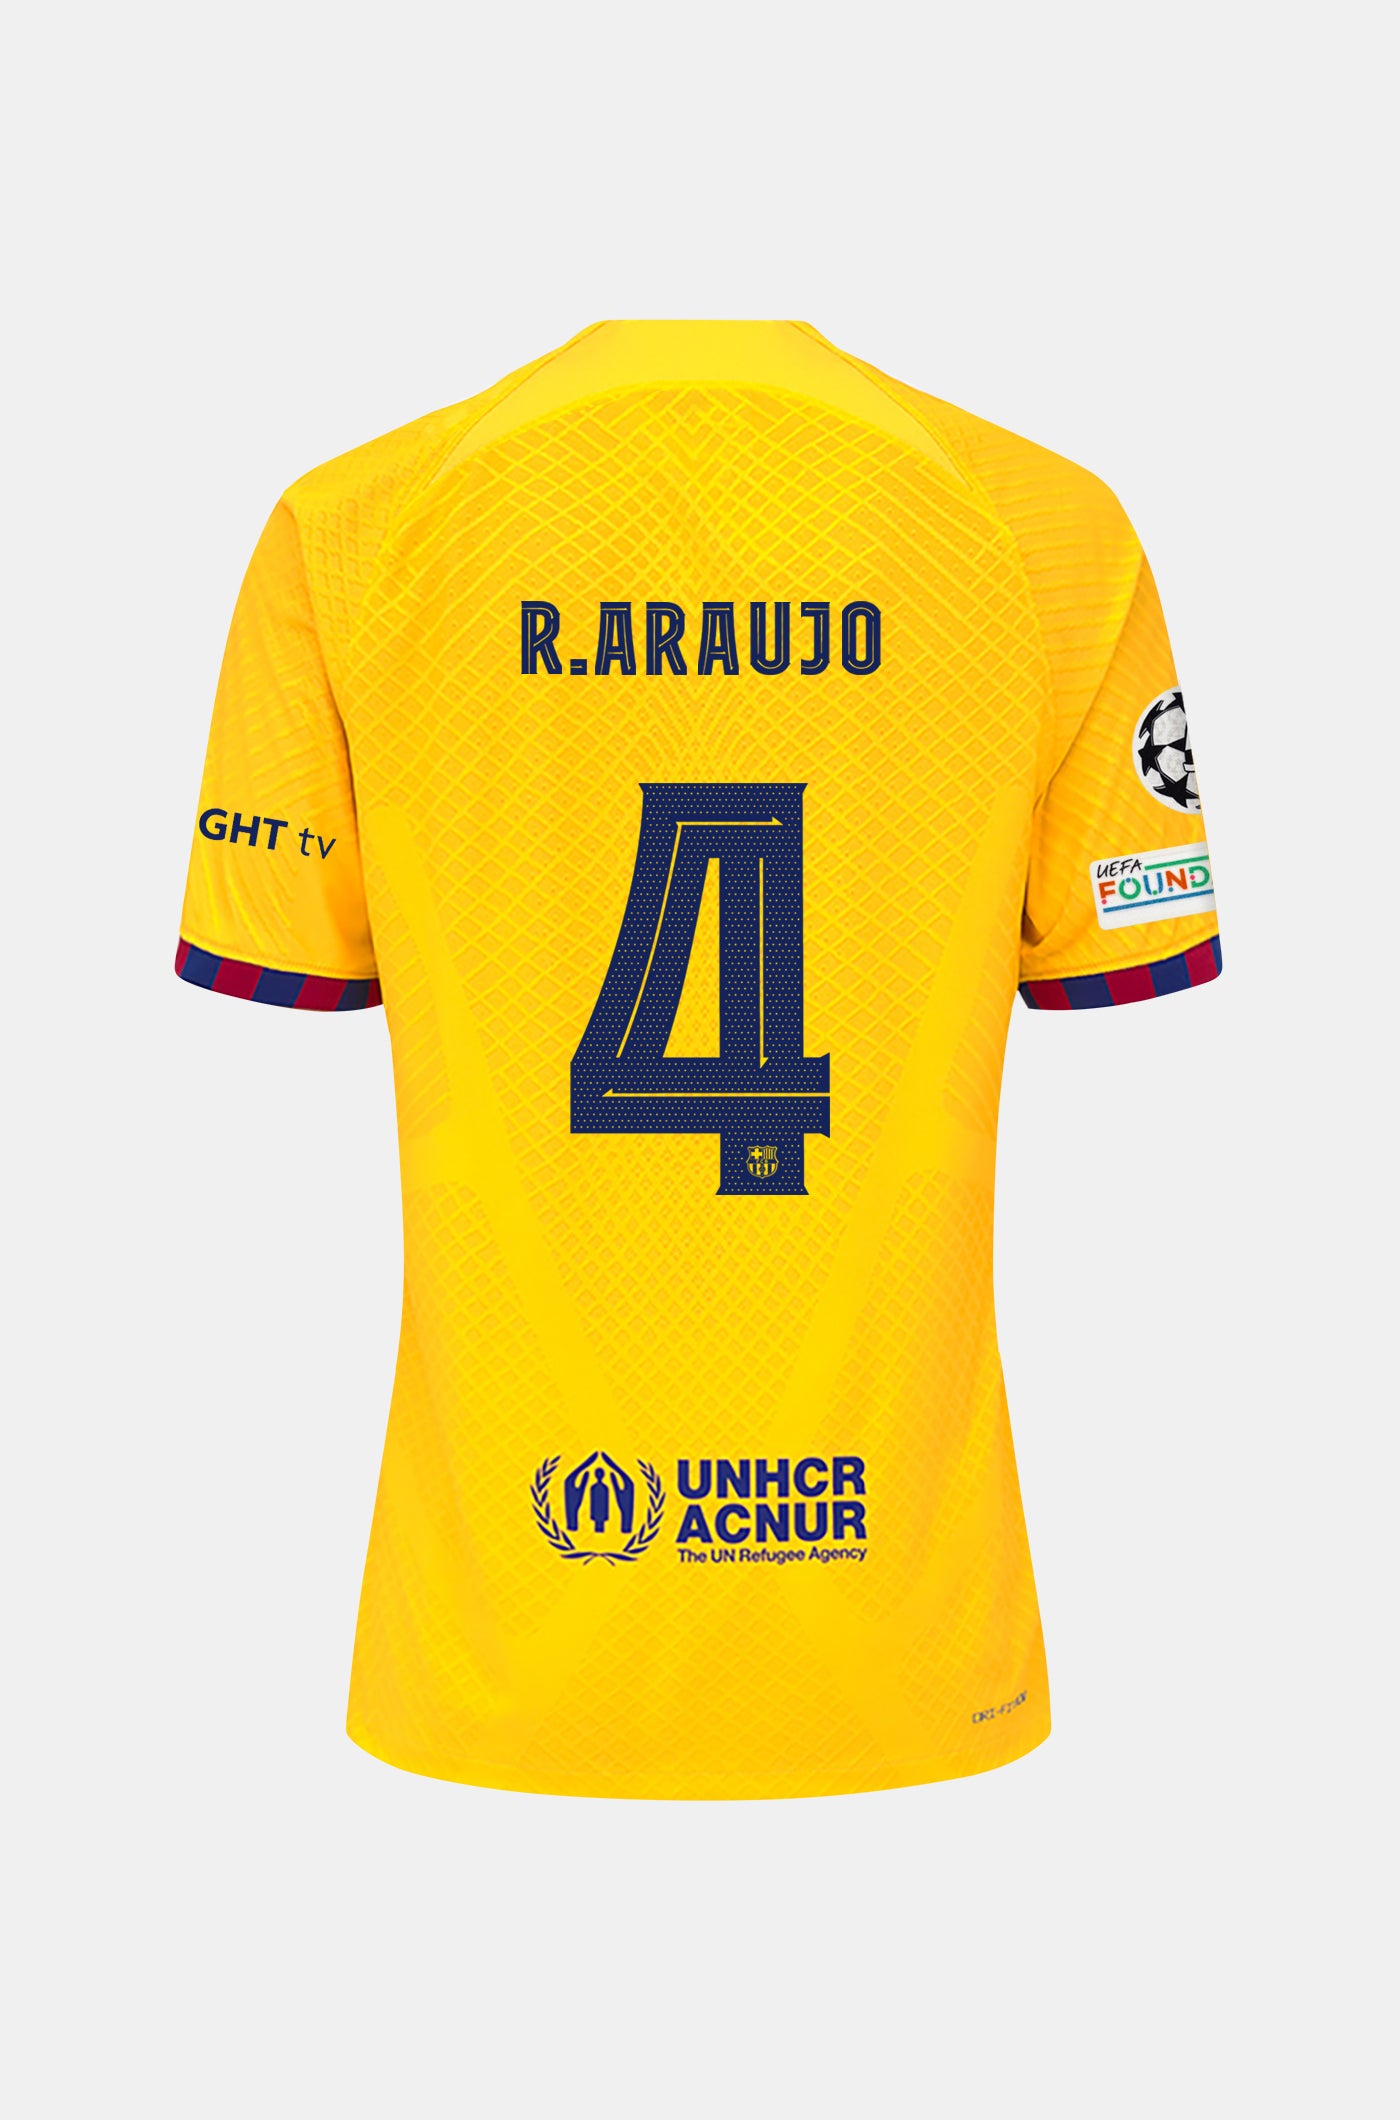 UCL FC Barcelona fourth shirt 23/24 Player’s Edition - R. ARAUJO